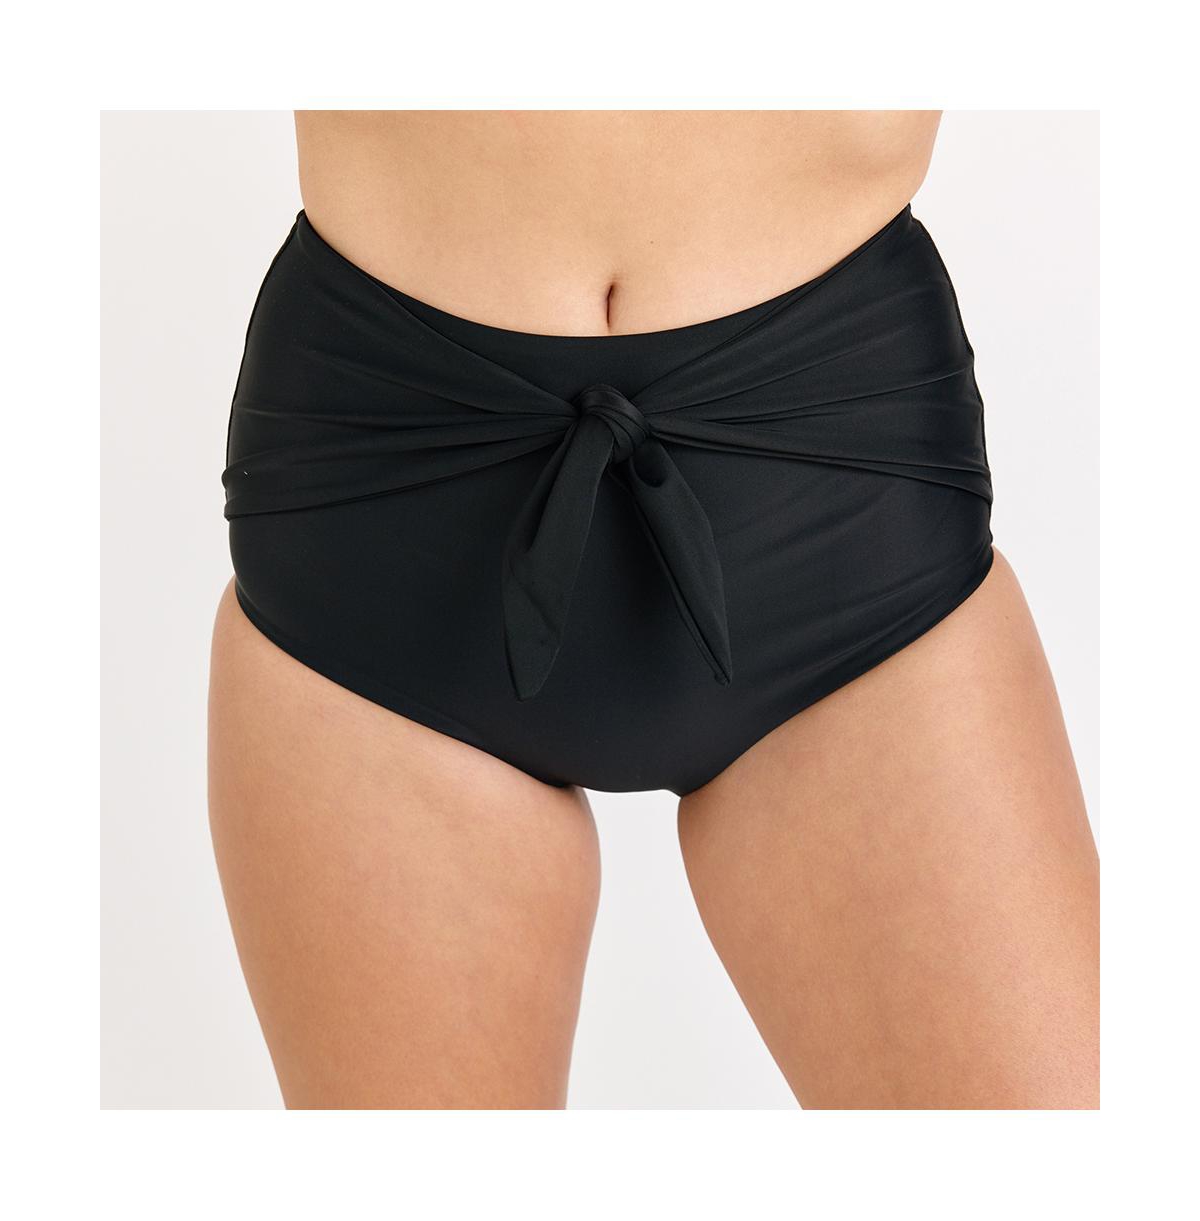 Women's High Waisted Bikini Bottom With Front Tie - Tropical views/navy polka dot